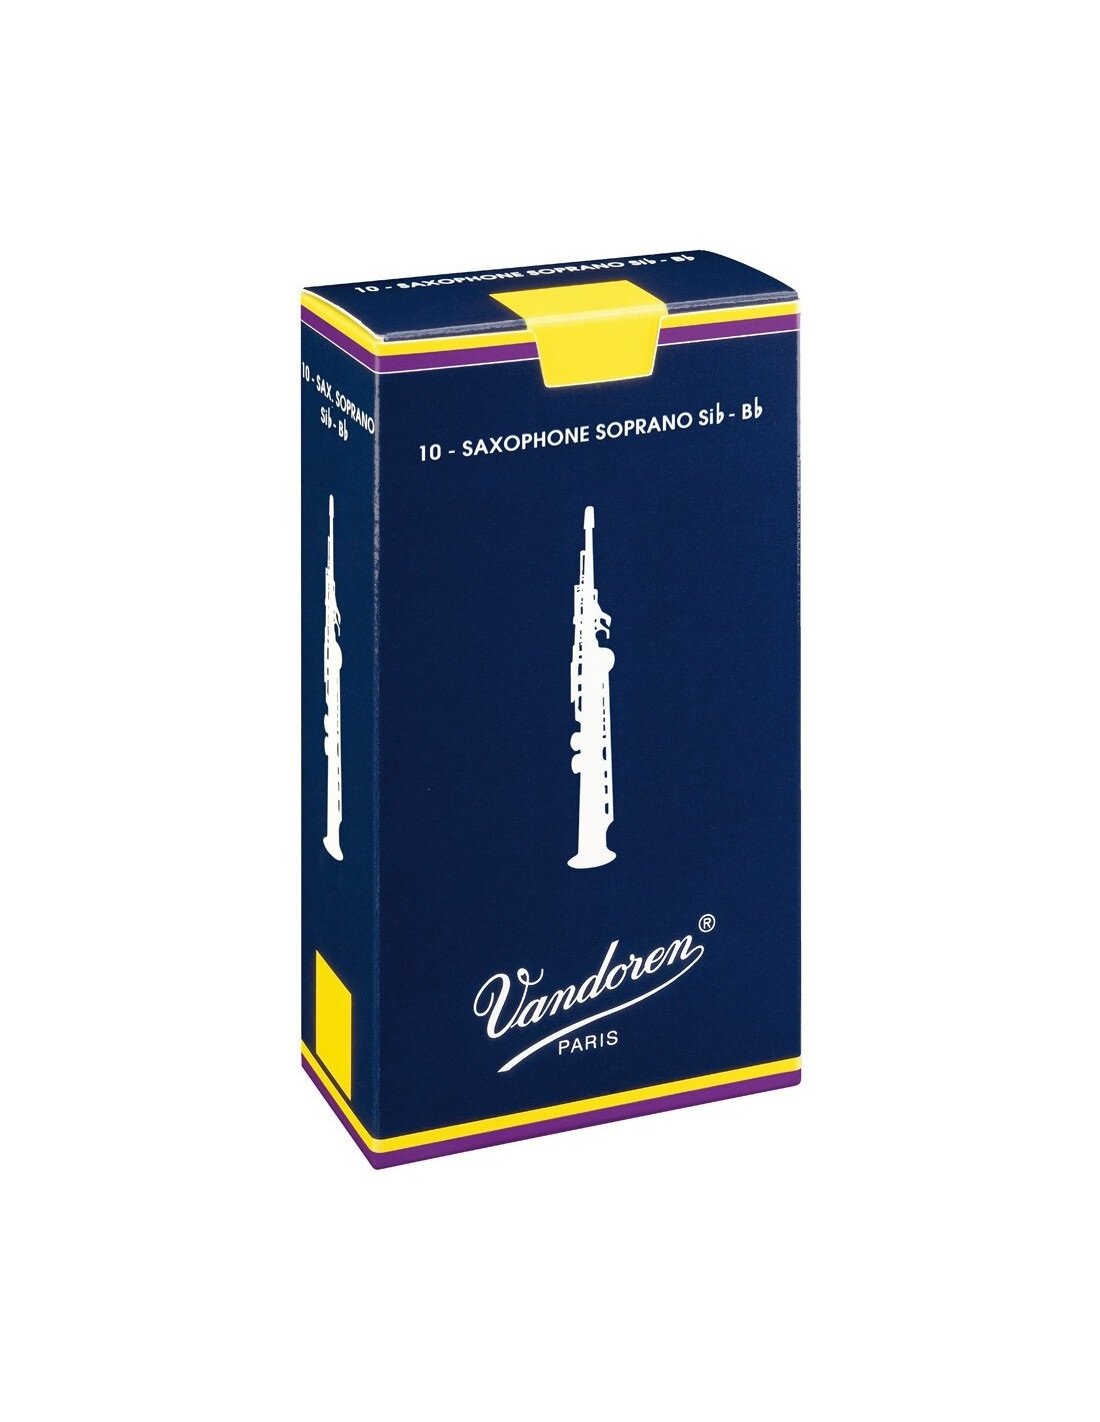 Vandoren Classic Saxophone Soprano Sib Force 3 x10 : photo 1